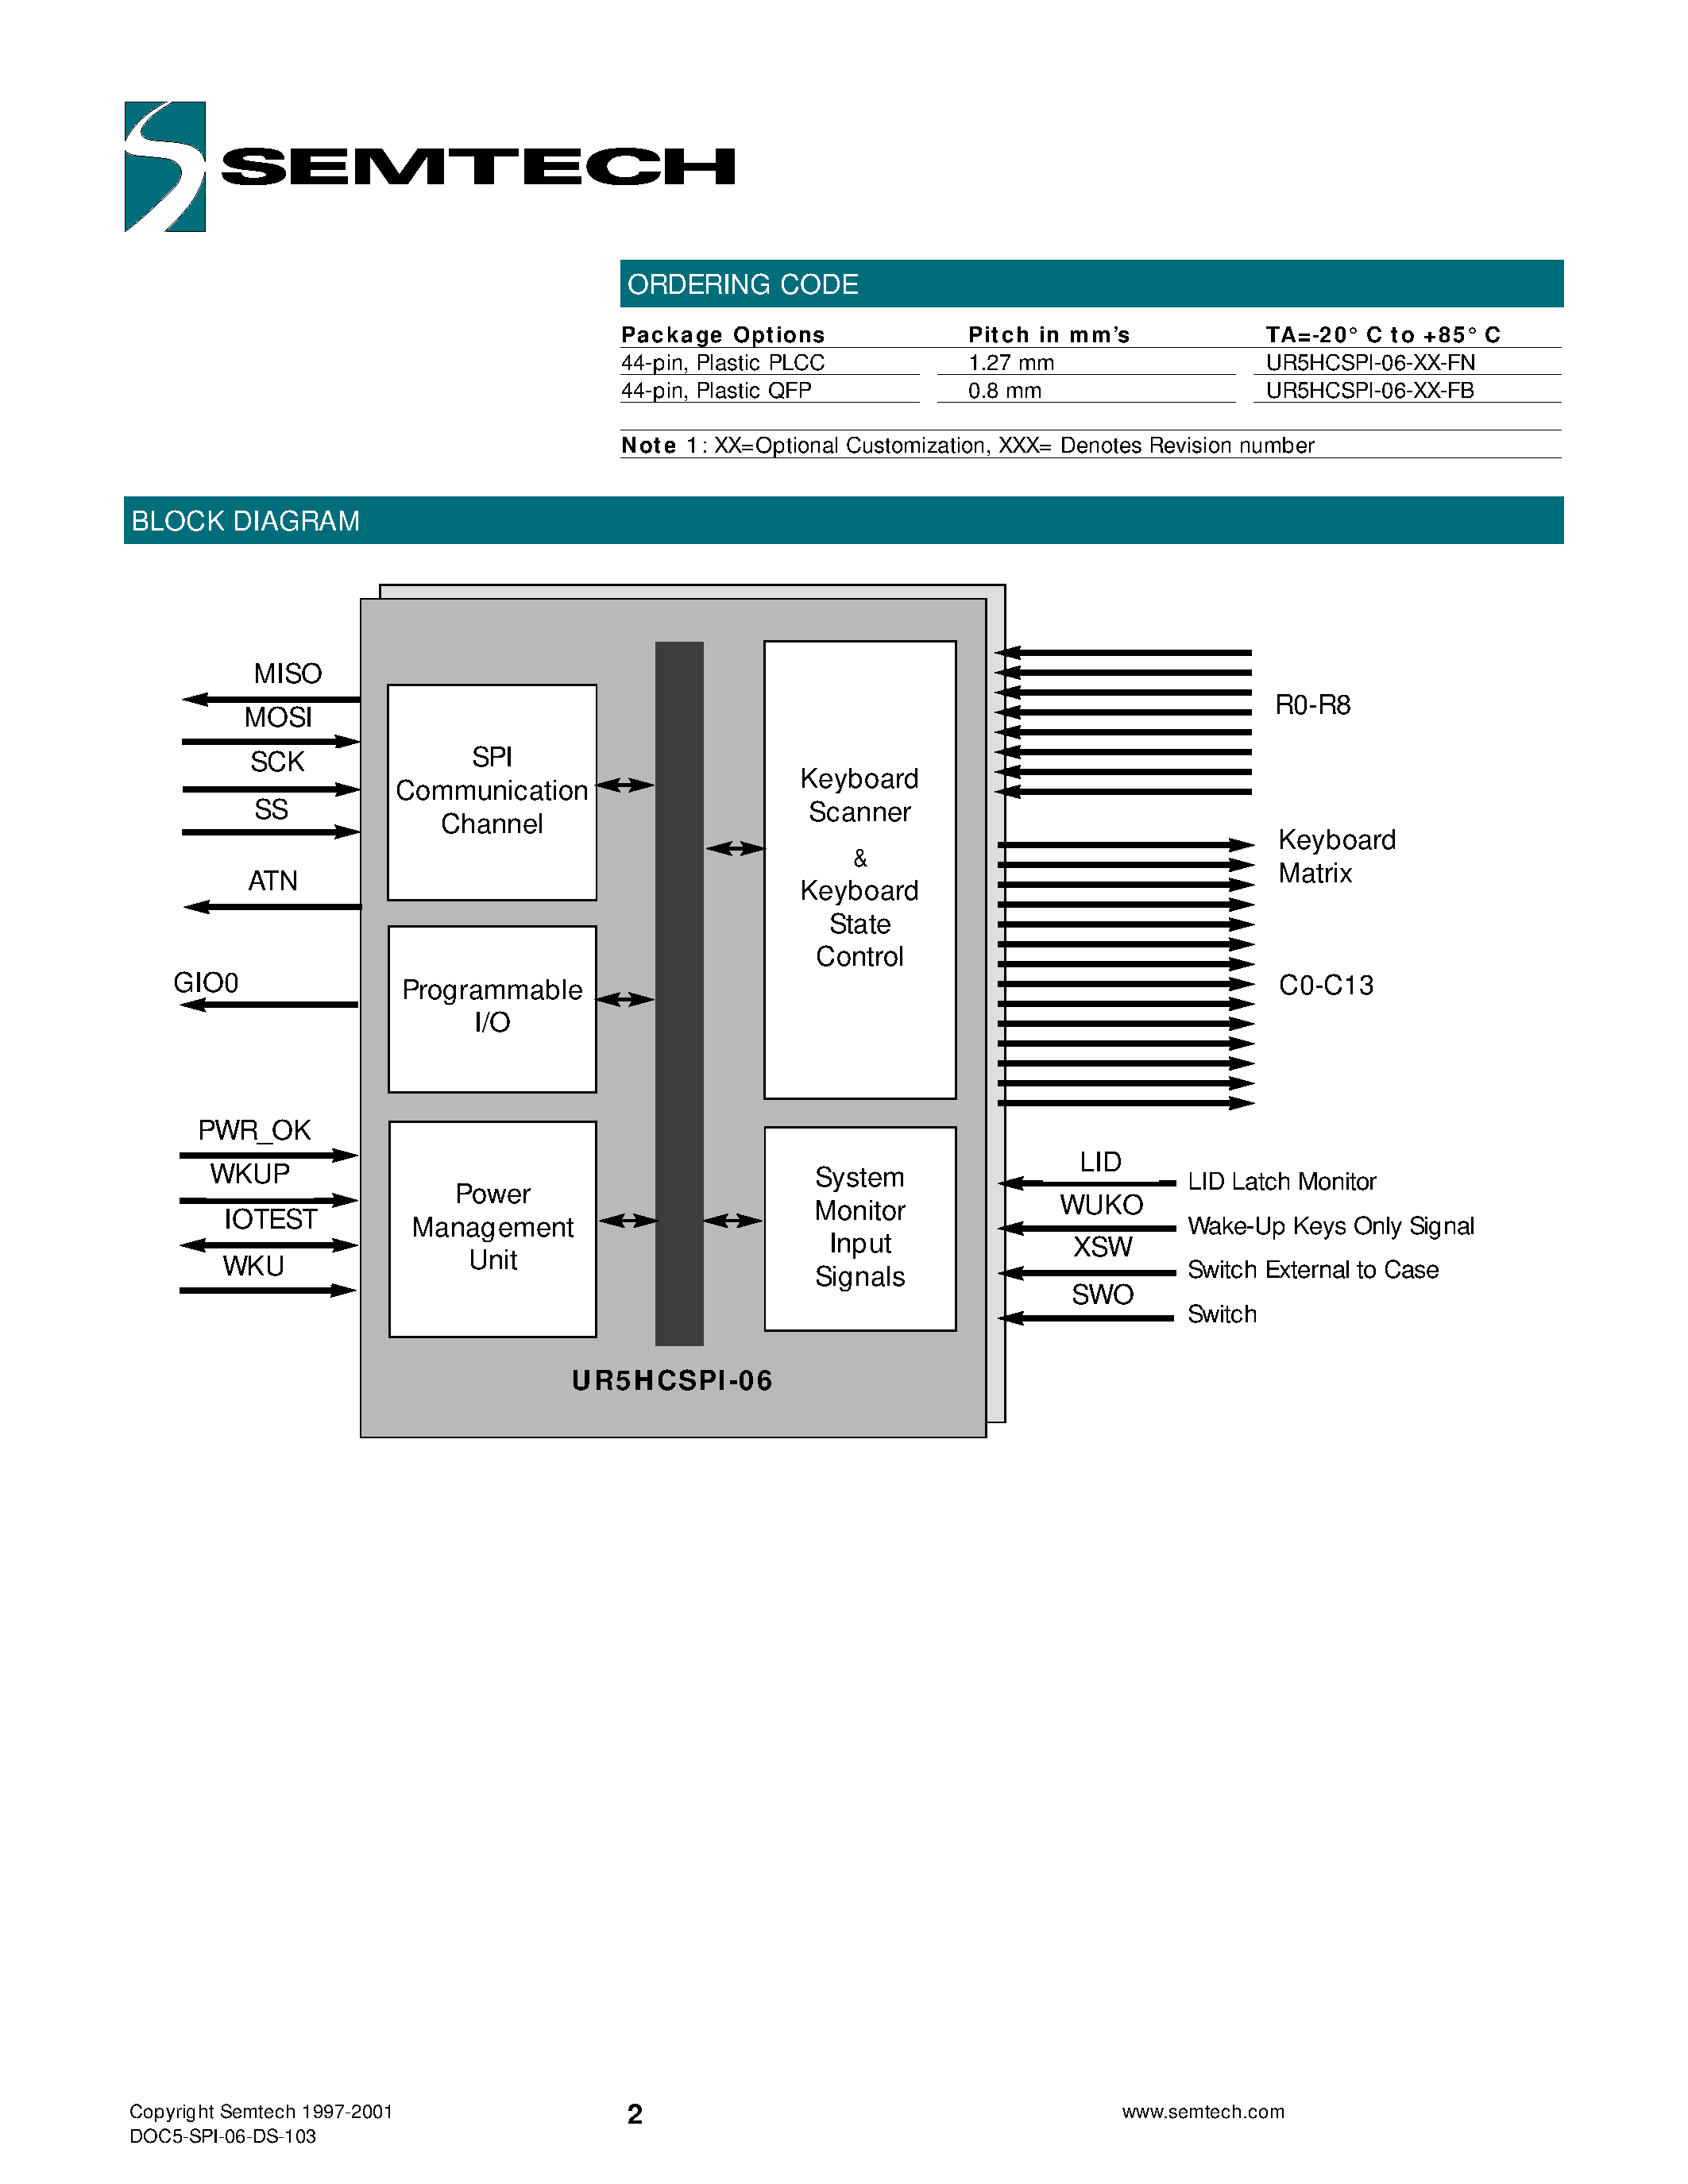 Datasheet UR5HCSPI-06-FN - Zero-PowerTM Keyboard Encoder & Power Management IC for H/PCs page 2